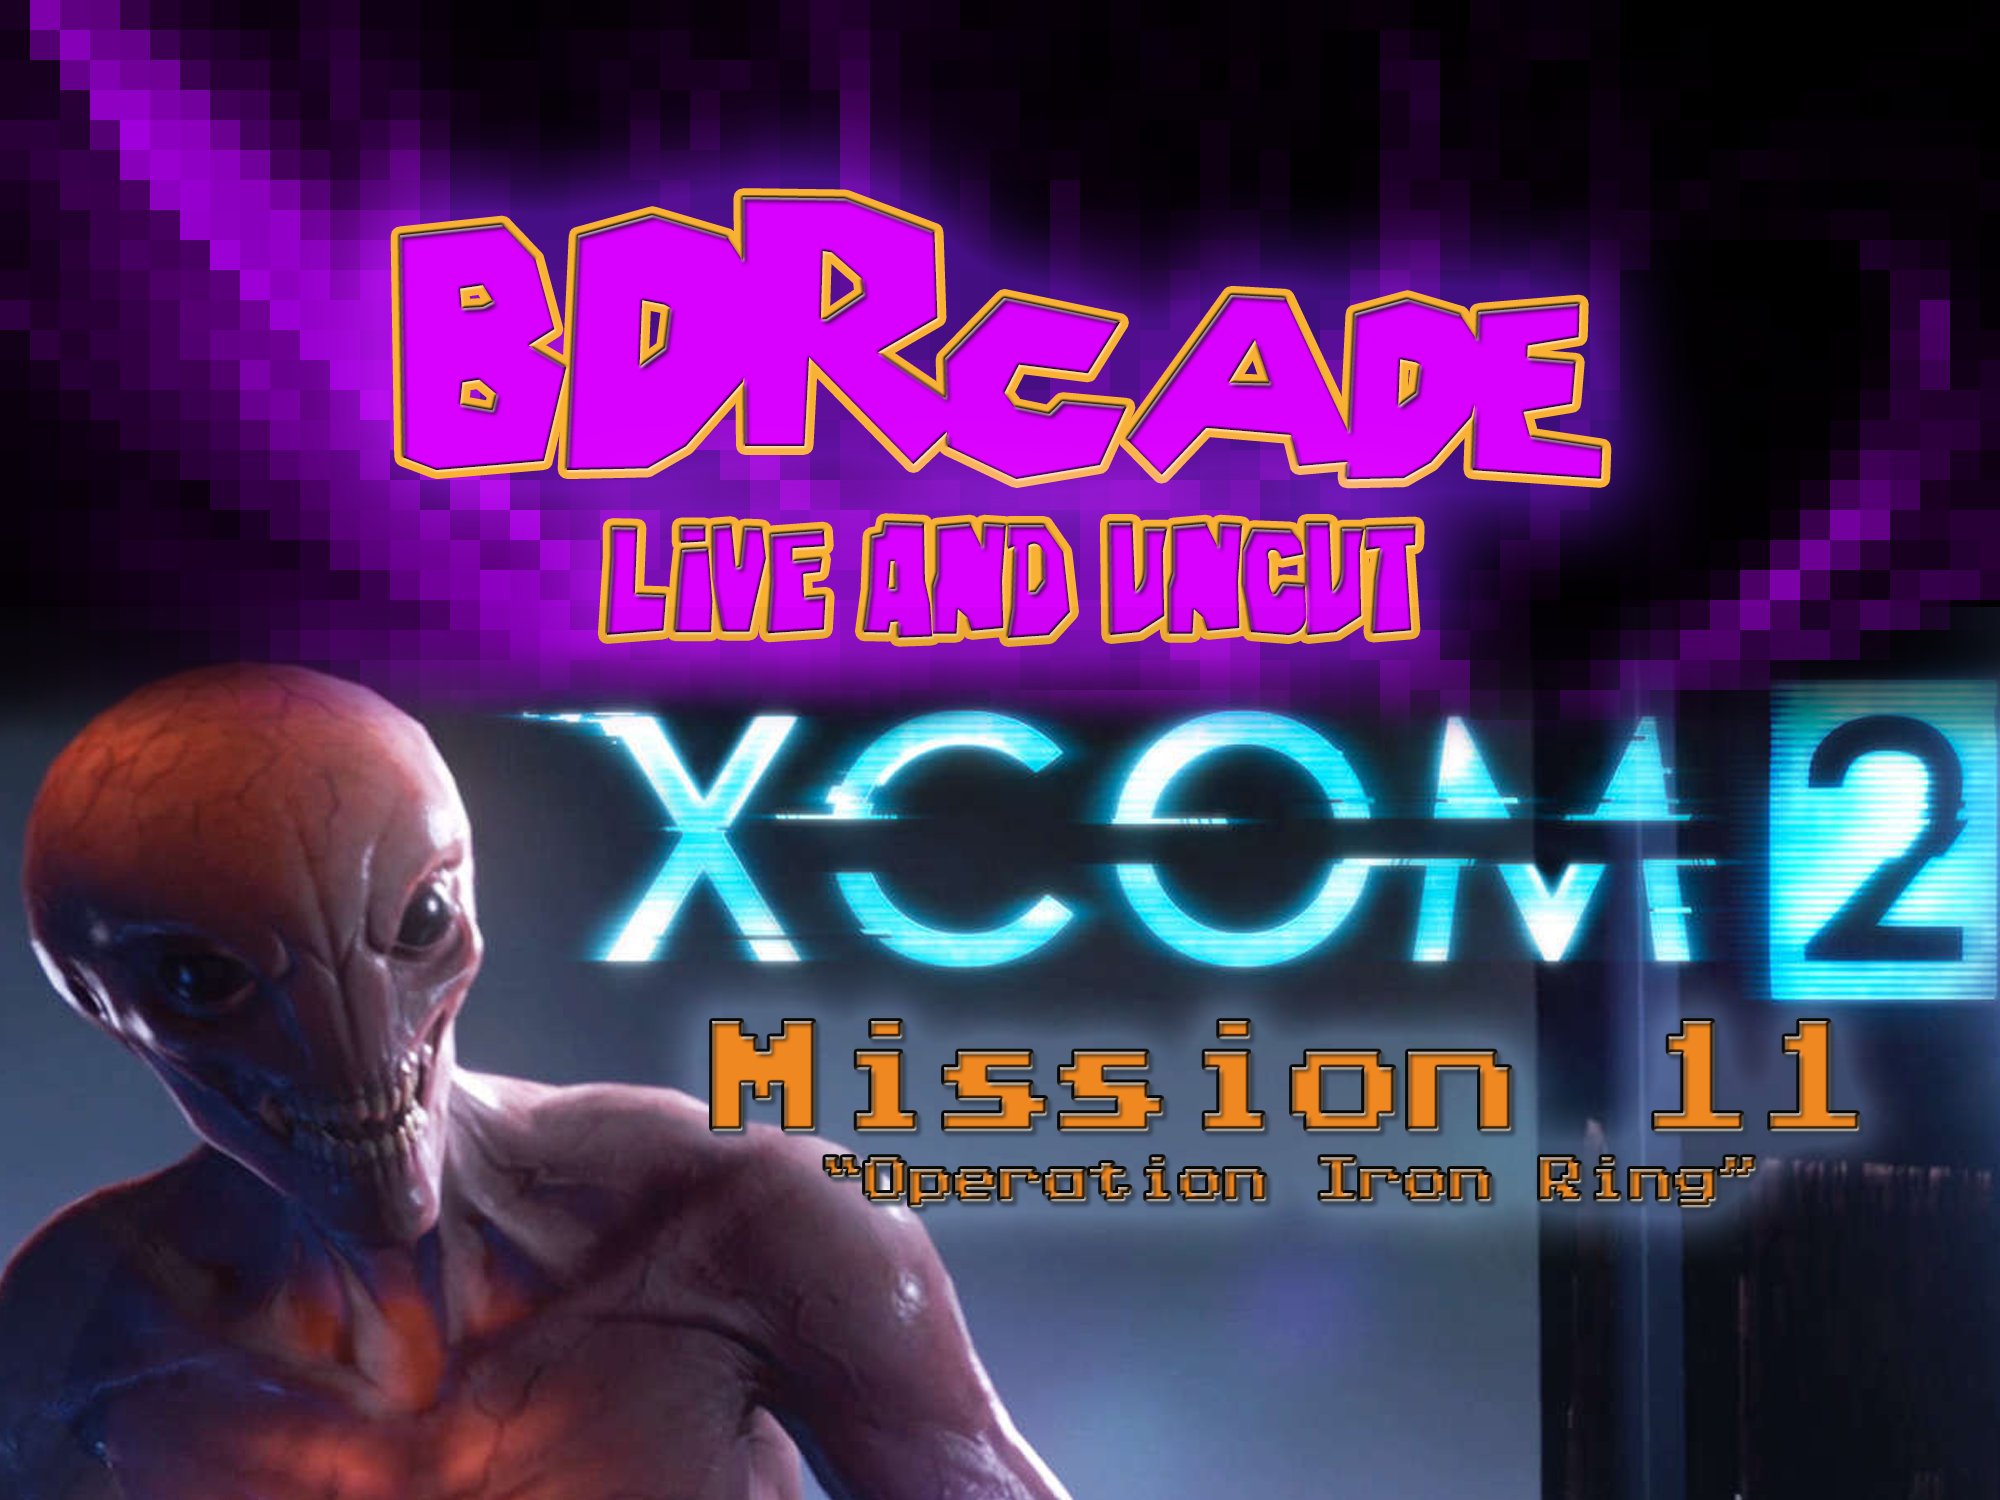 XCOM 2 – Mission 11 : “Operation Iron Ring” – A BDRcade Live Stream